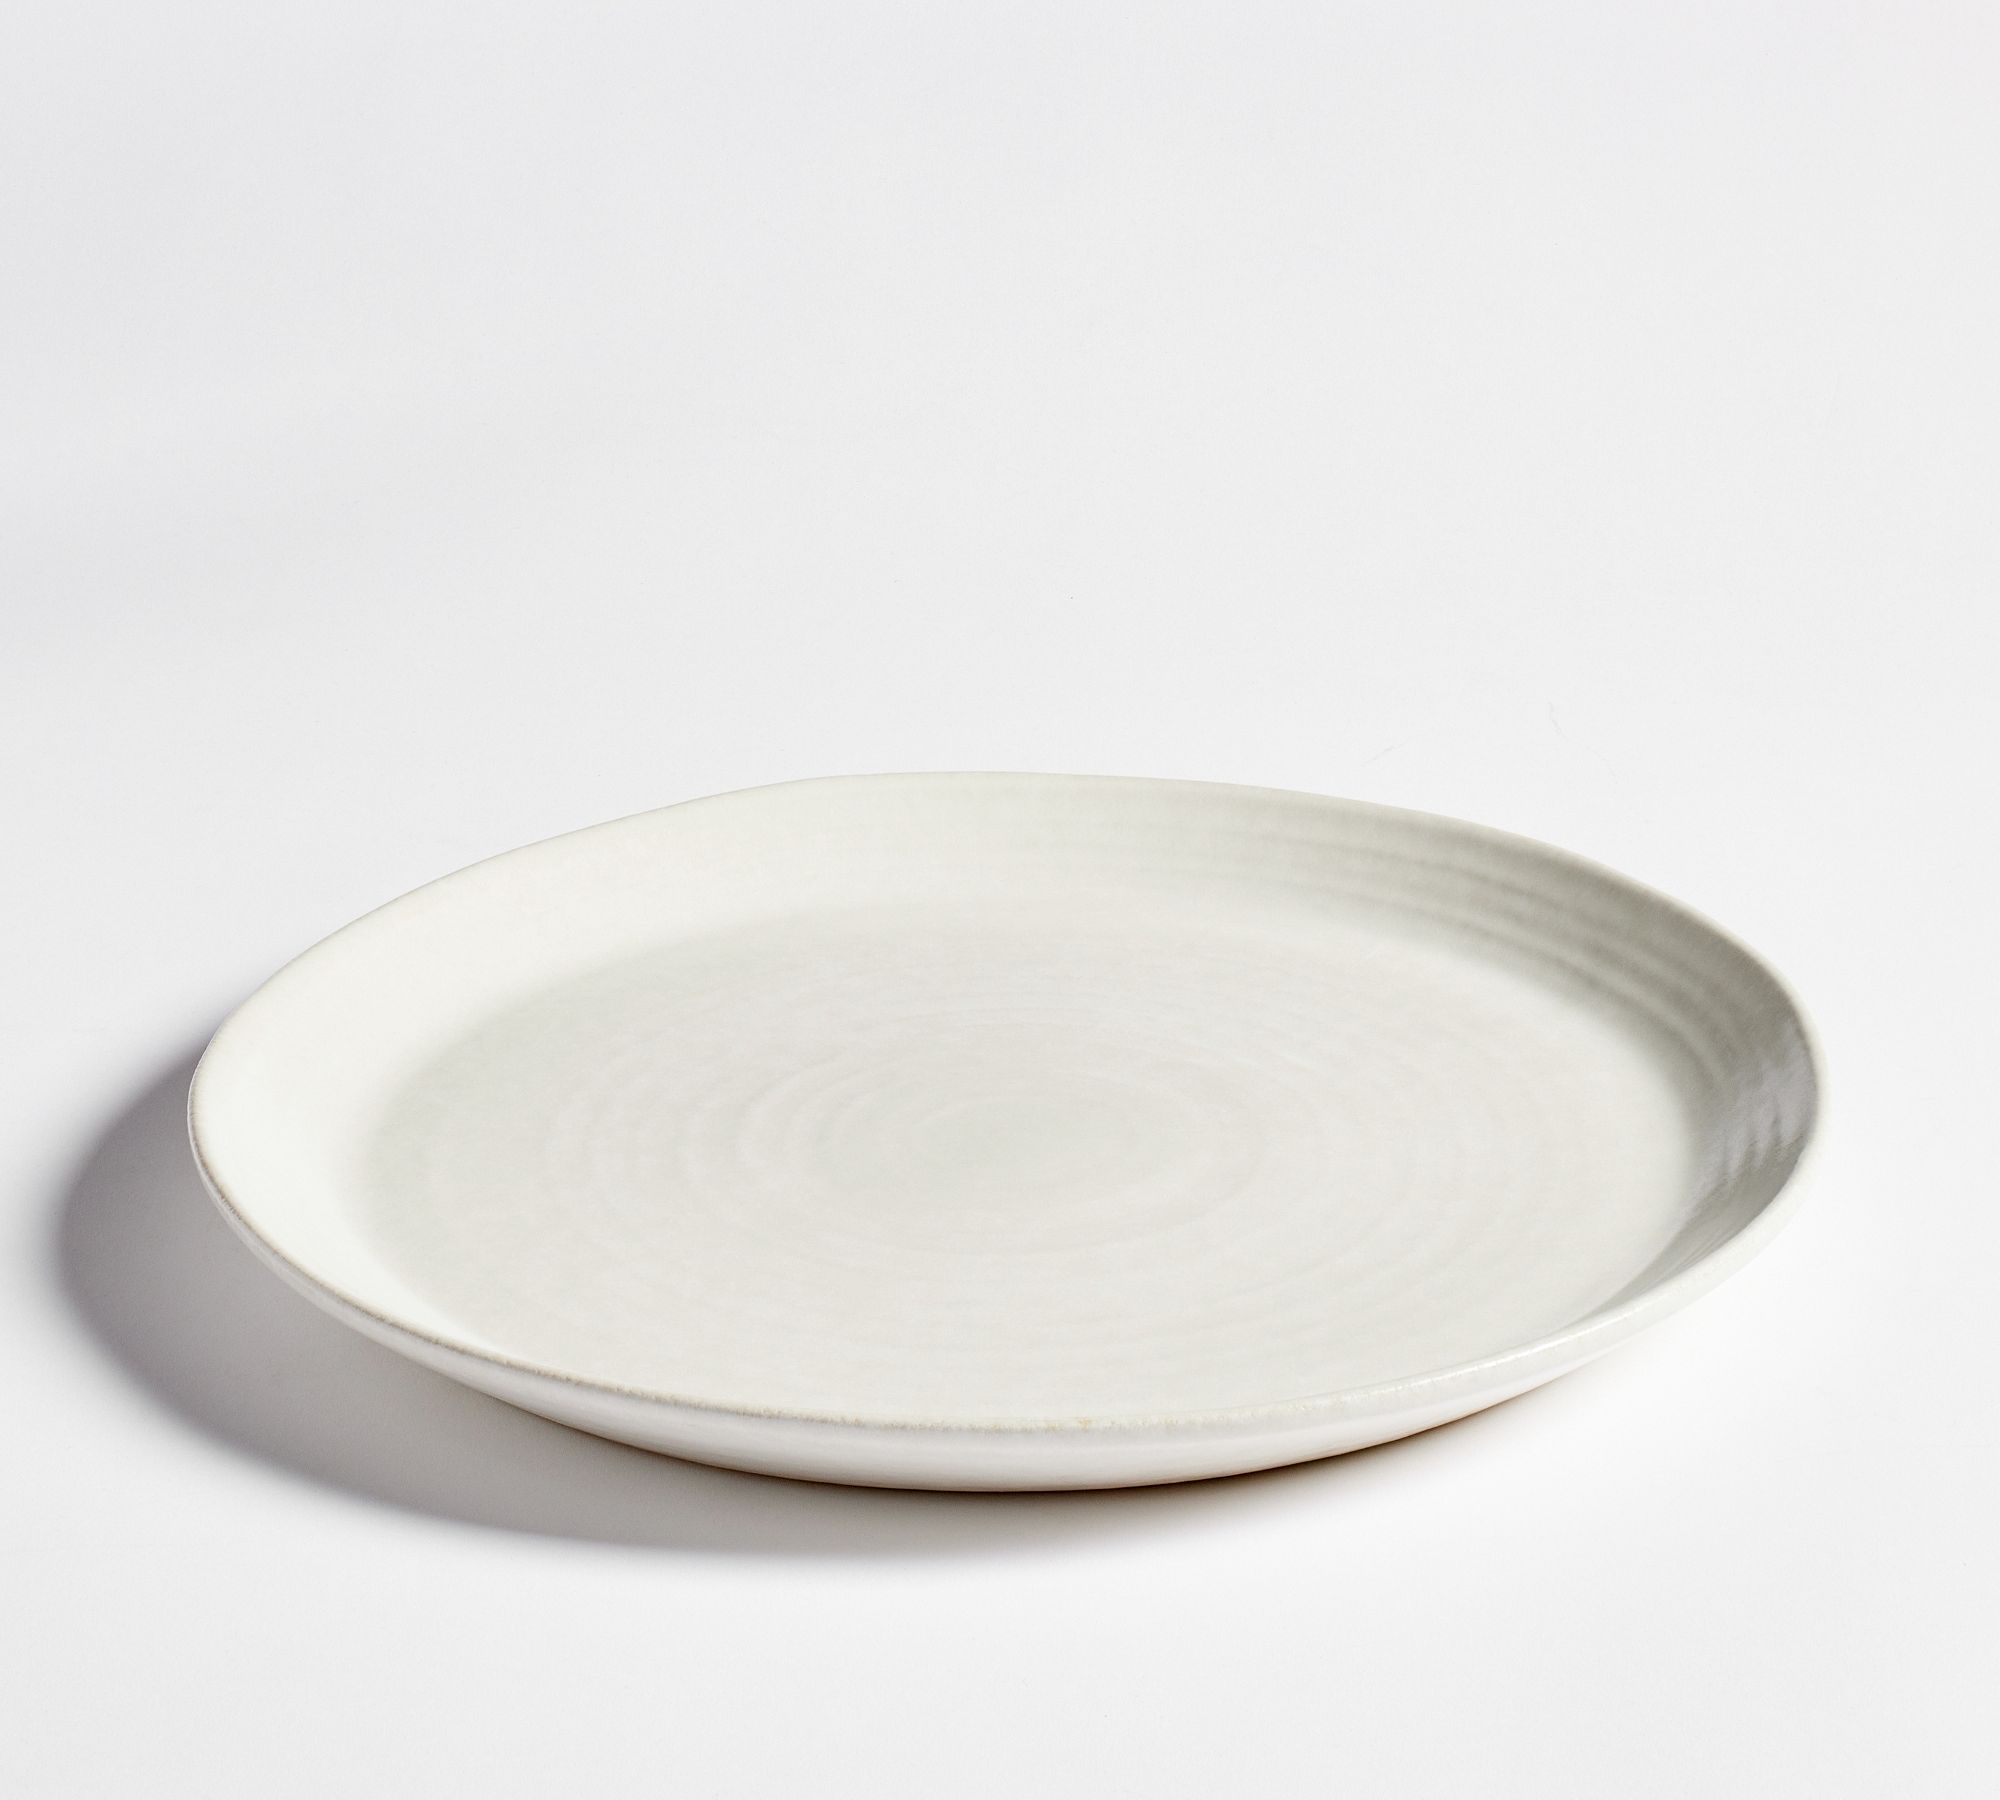 Larkin Reactive Glaze Stoneware Serving Platter